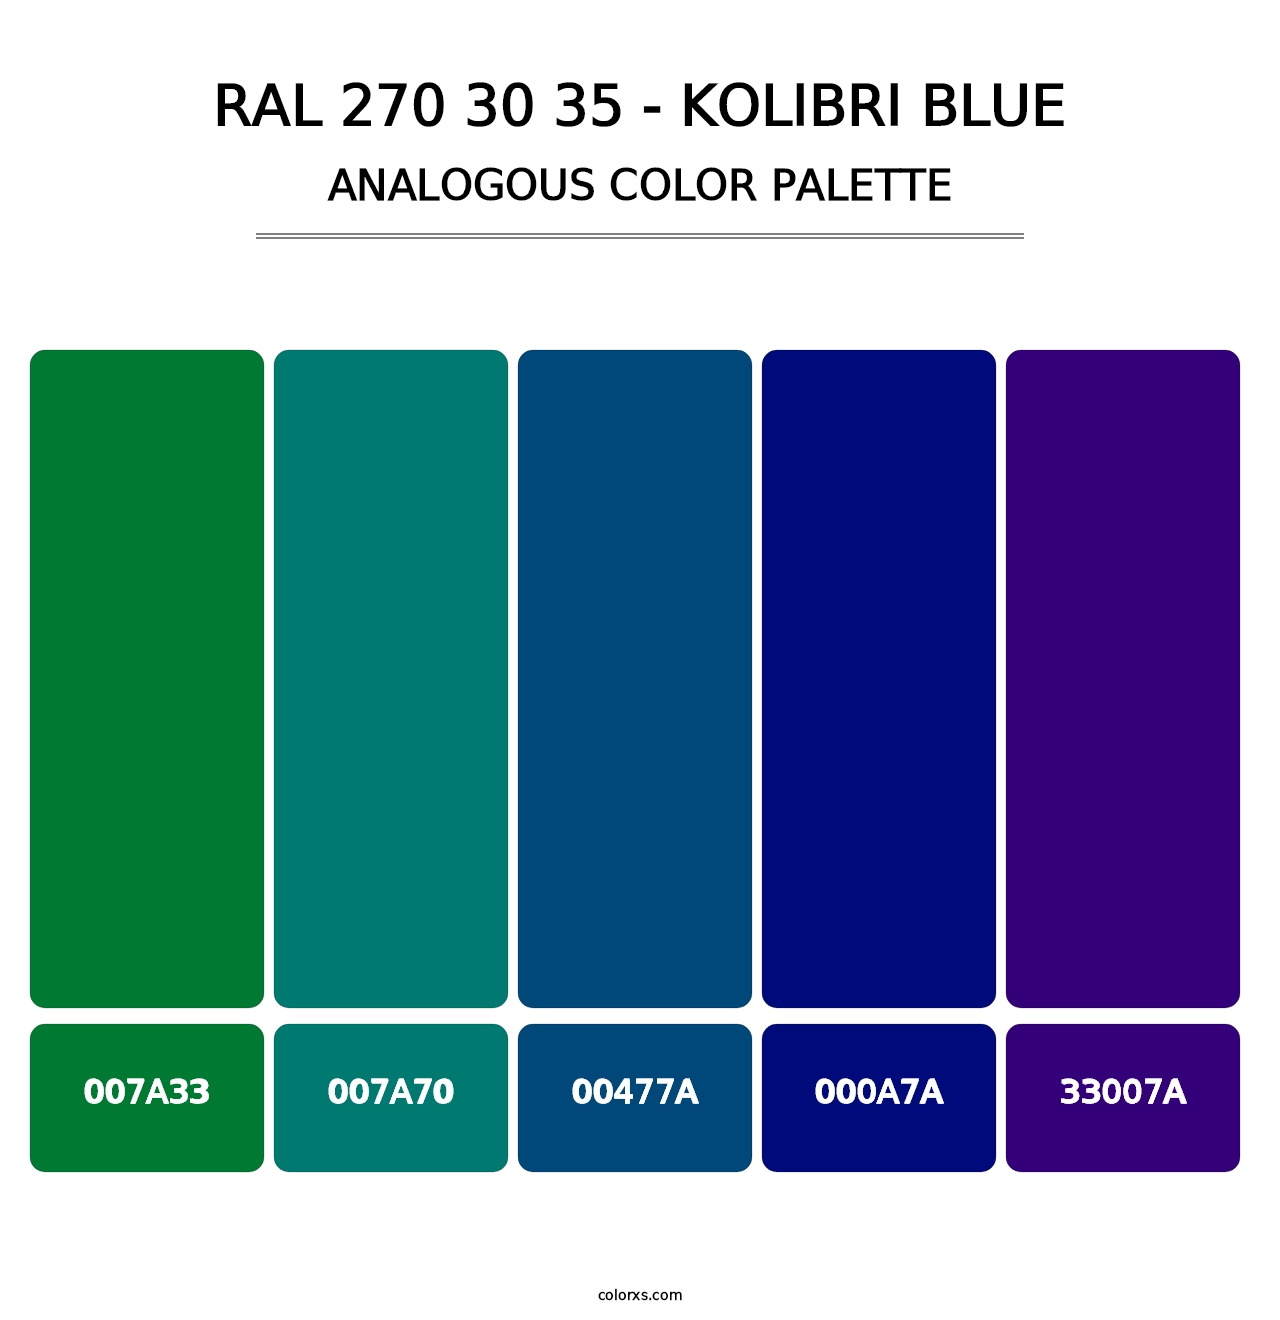 RAL 270 30 35 - Kolibri Blue - Analogous Color Palette